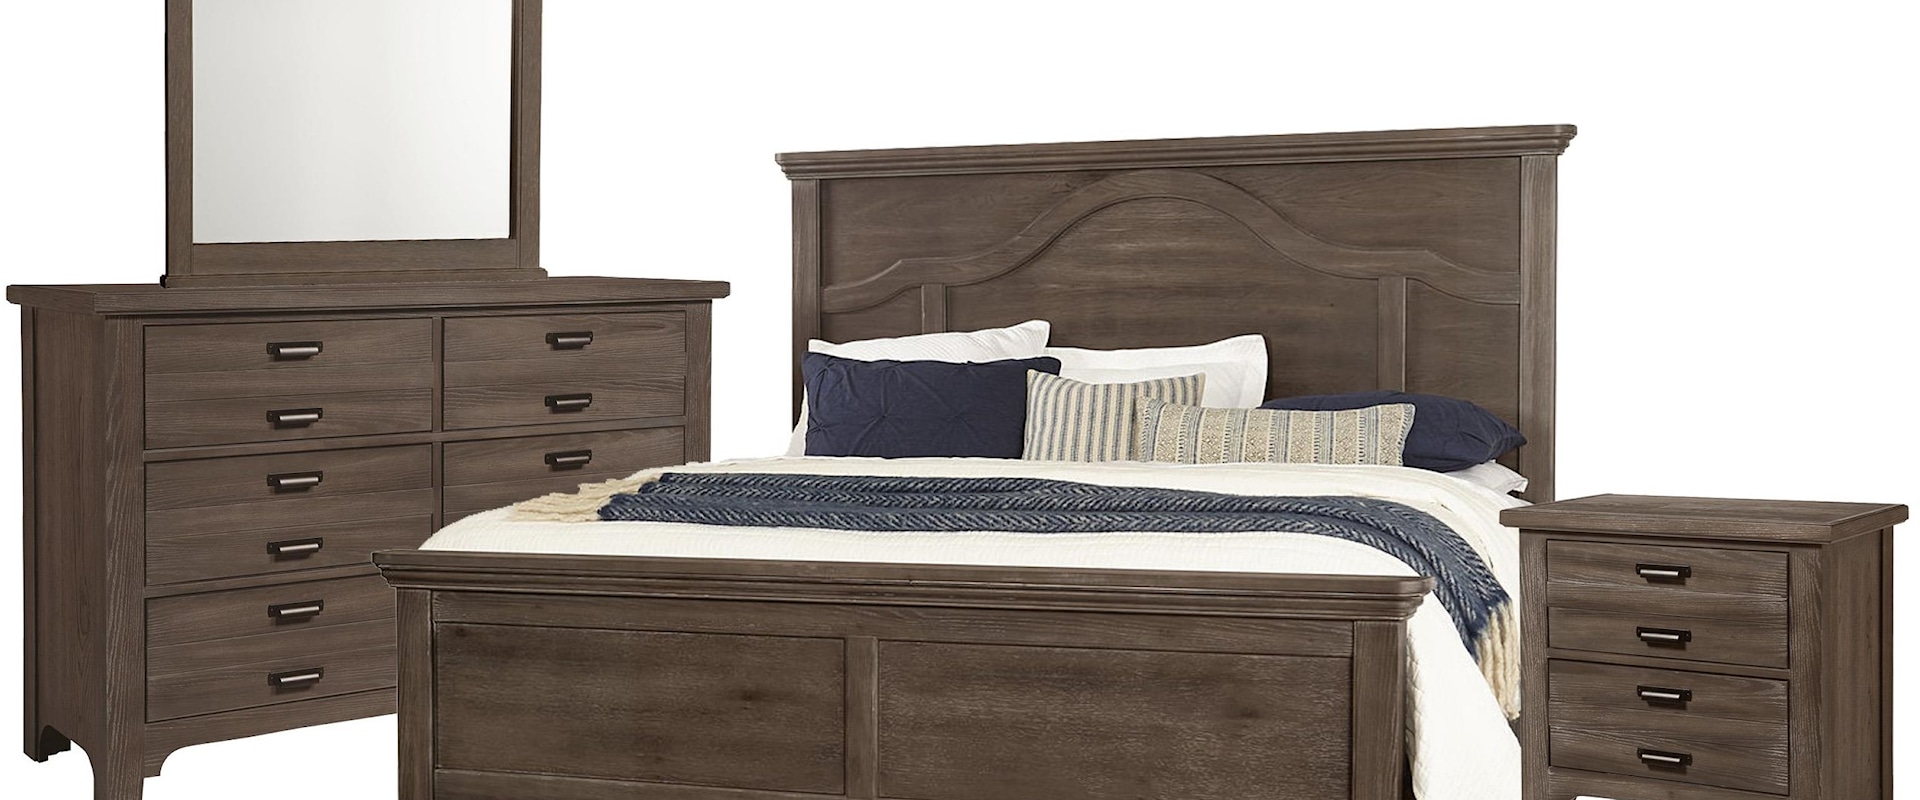 King Mantel Bed, Double Dresser, Landscape Mirror, 2 Drawer Nightstand